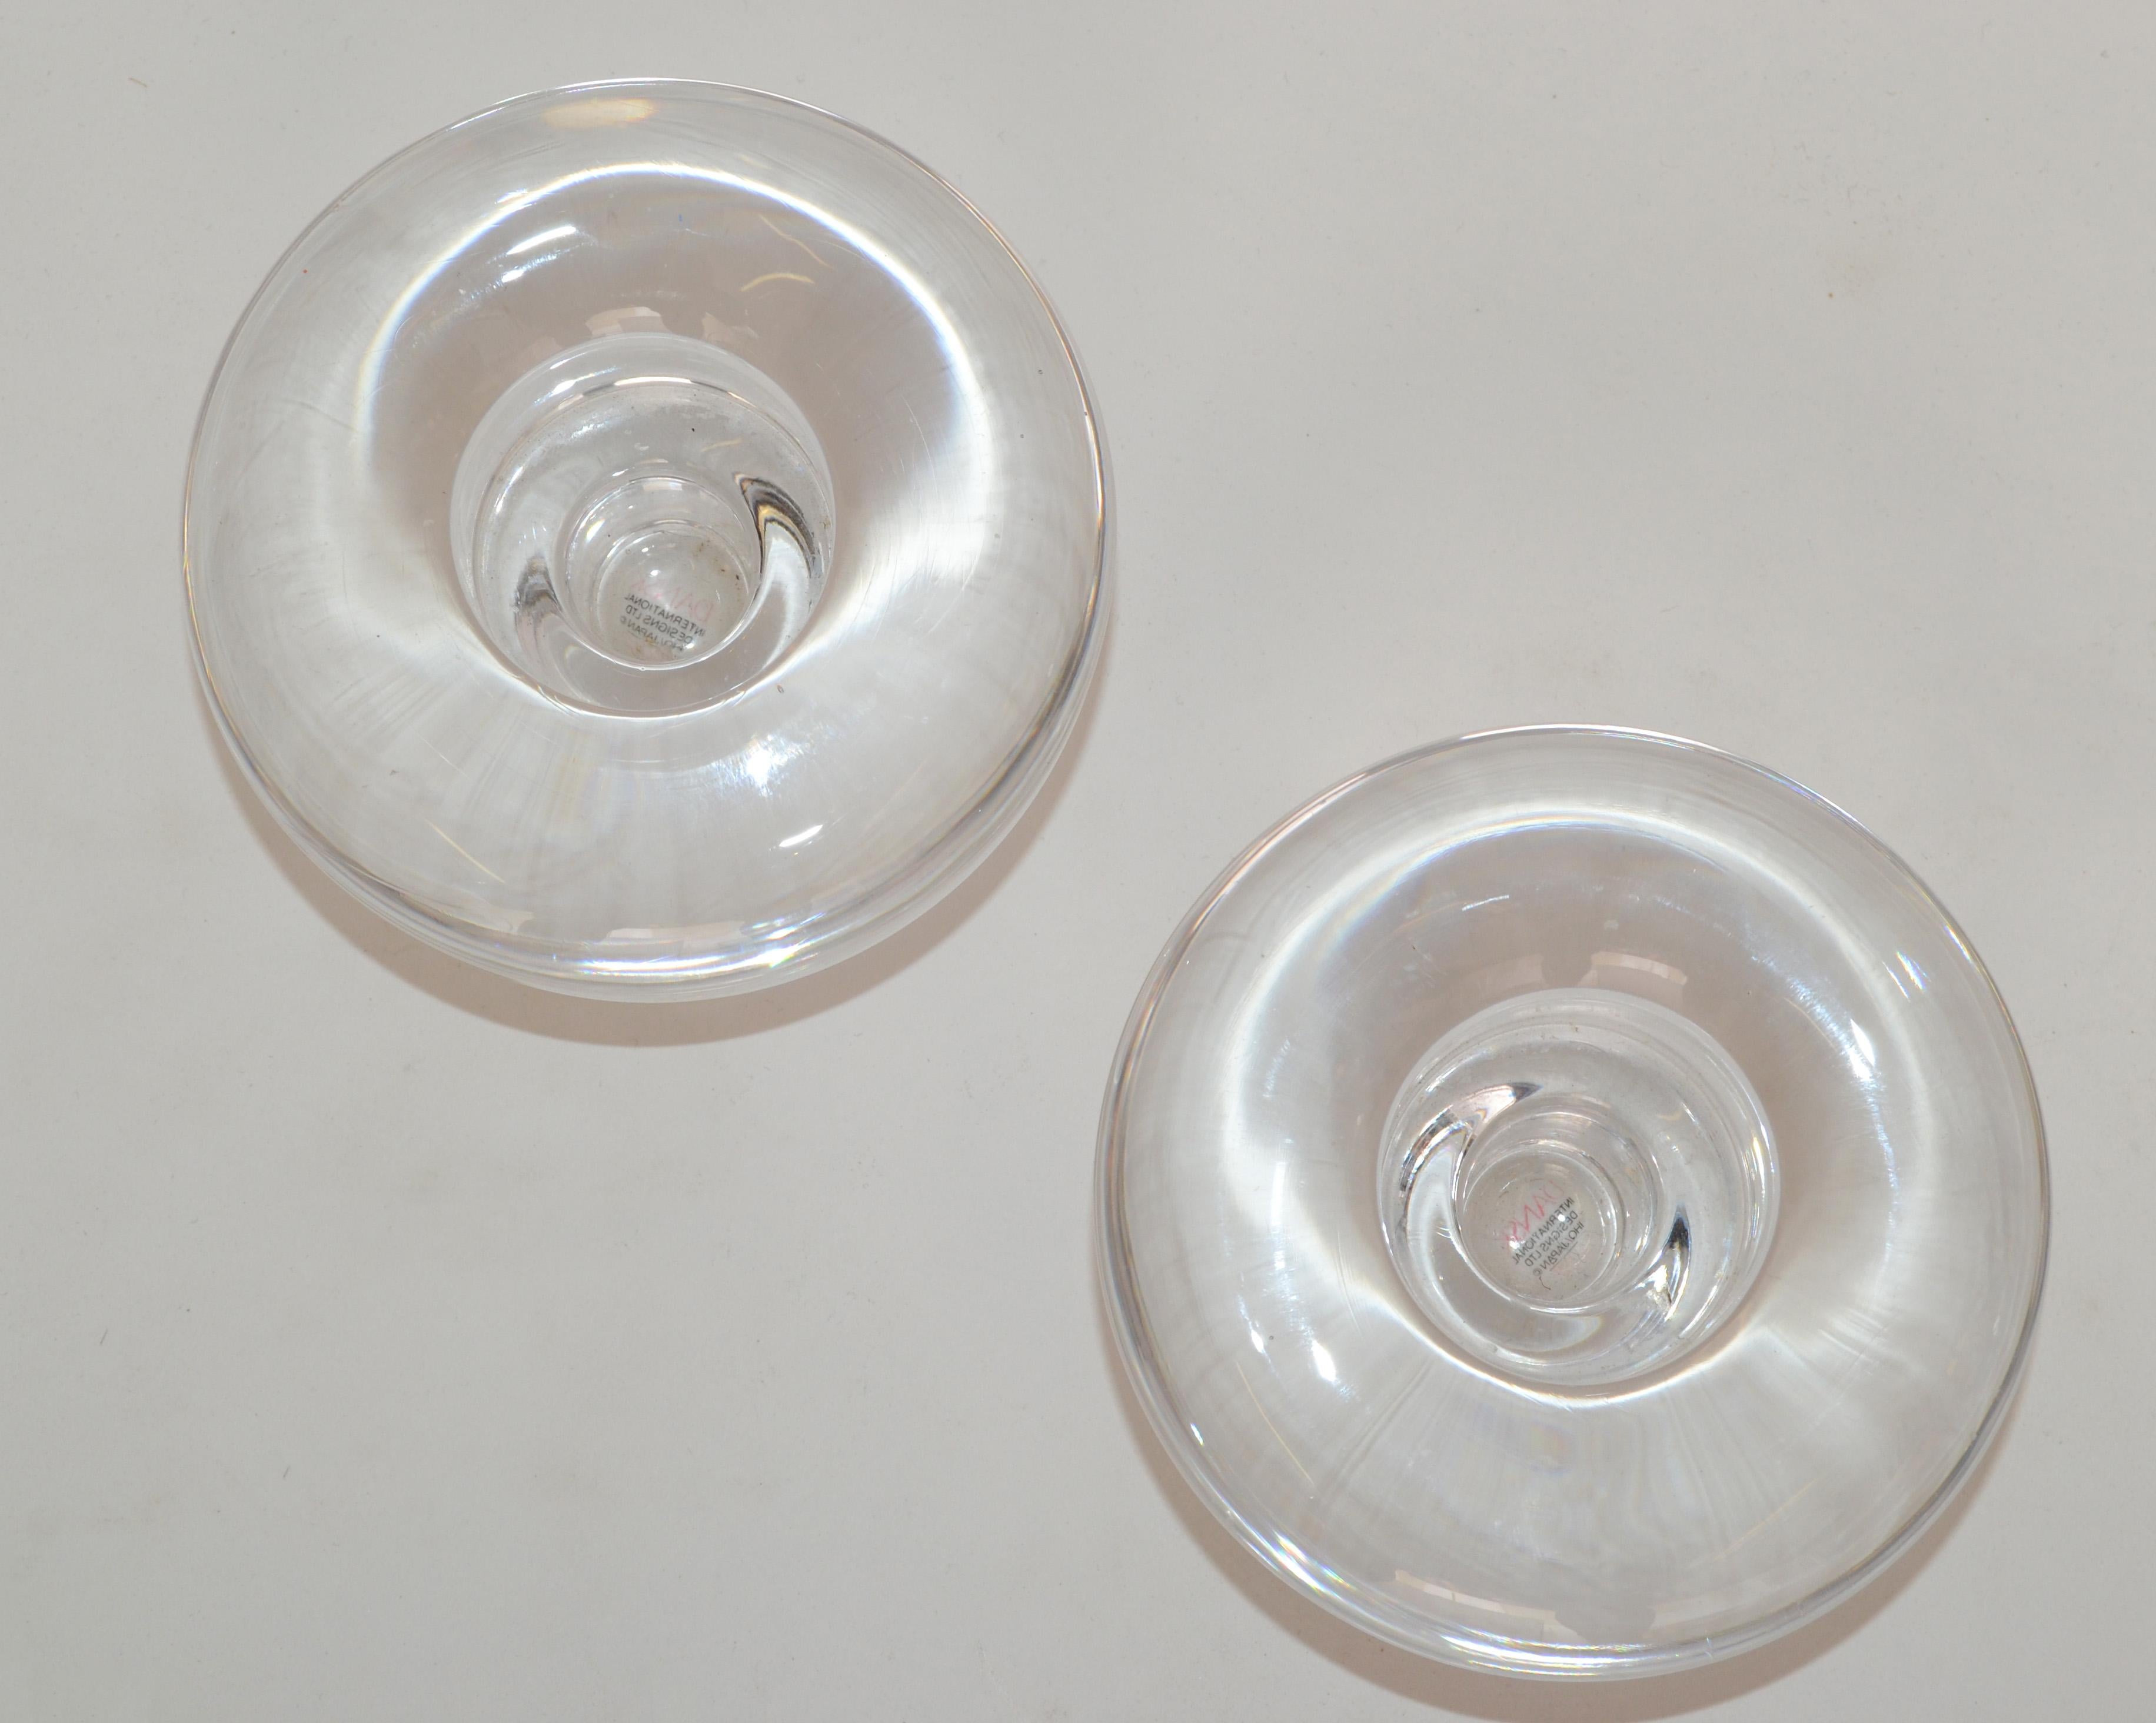 20th Century Scandinavian Modern Dansk International Pair of Lead Crystal Glass Candle Holder For Sale